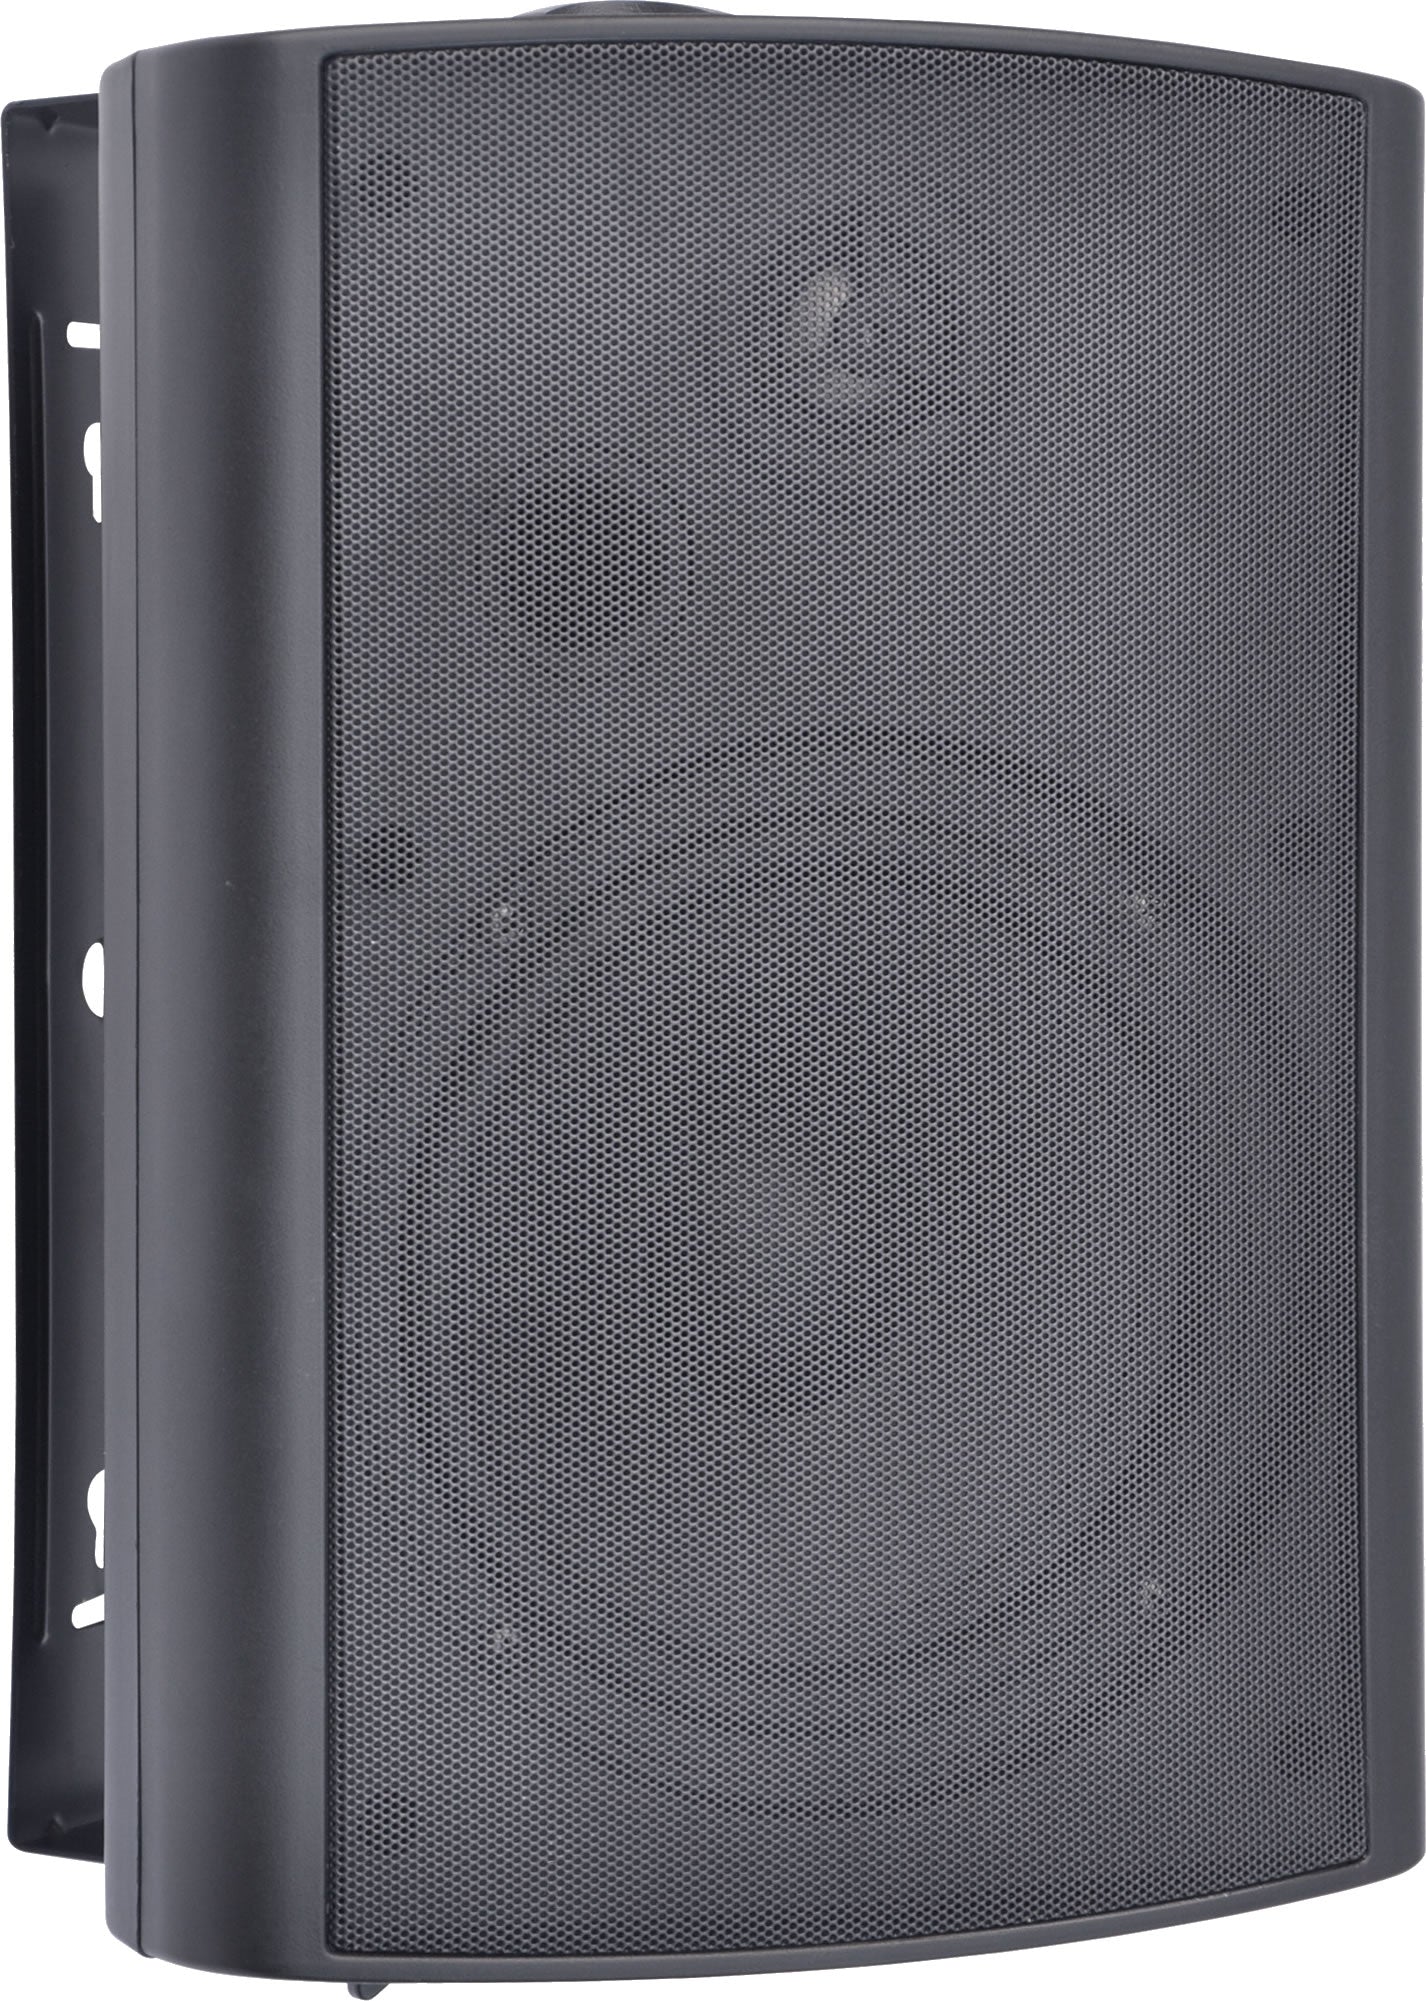 89-8405B 5.25" 2-Way Mini Box Speaker with Poly Tweeter - Black